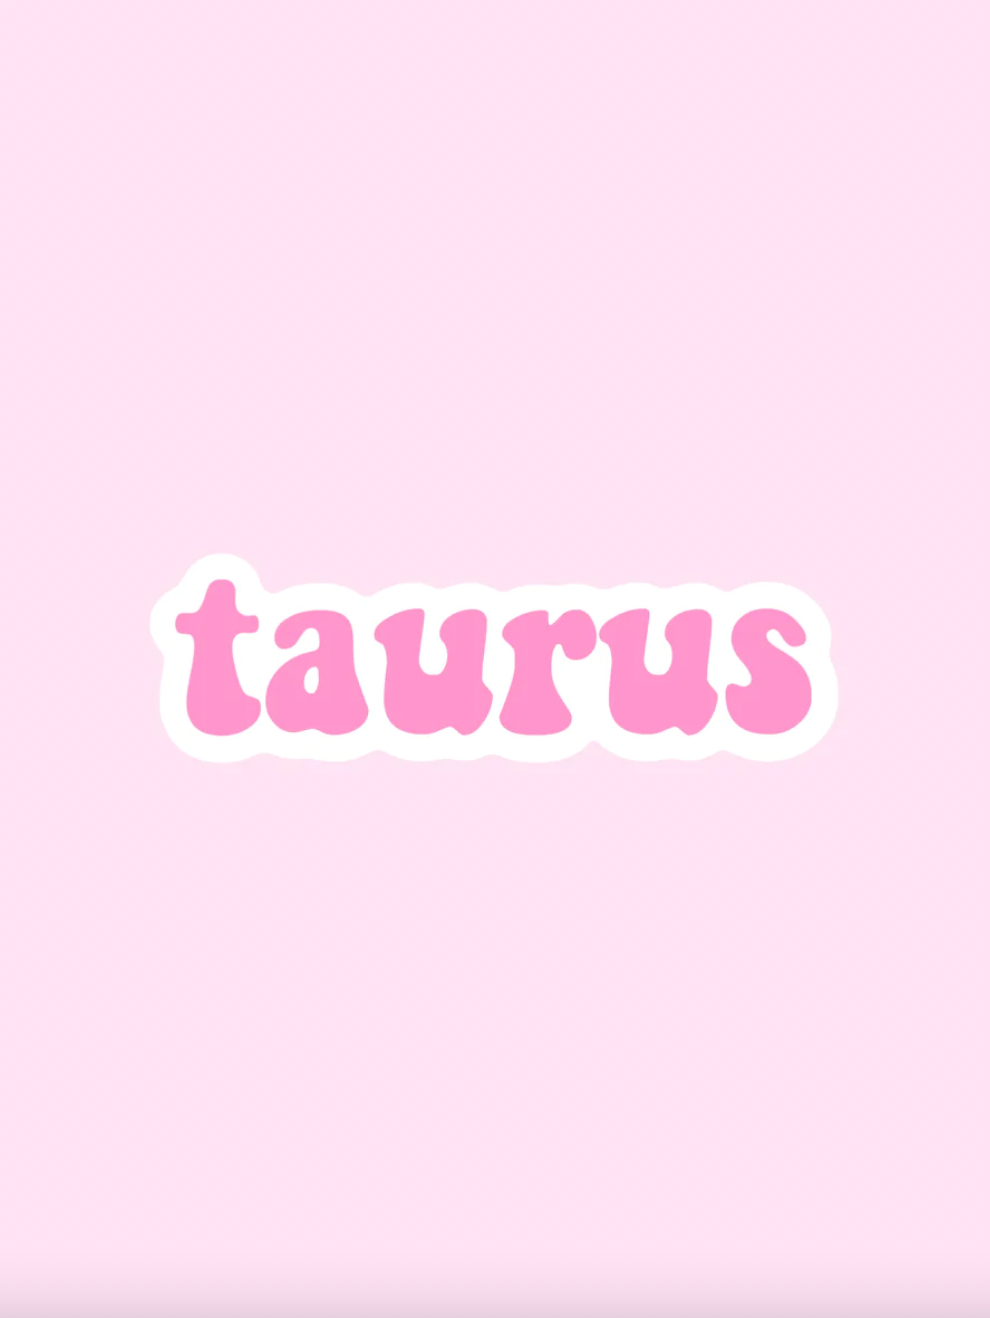 Hair Horoscope: Taurus